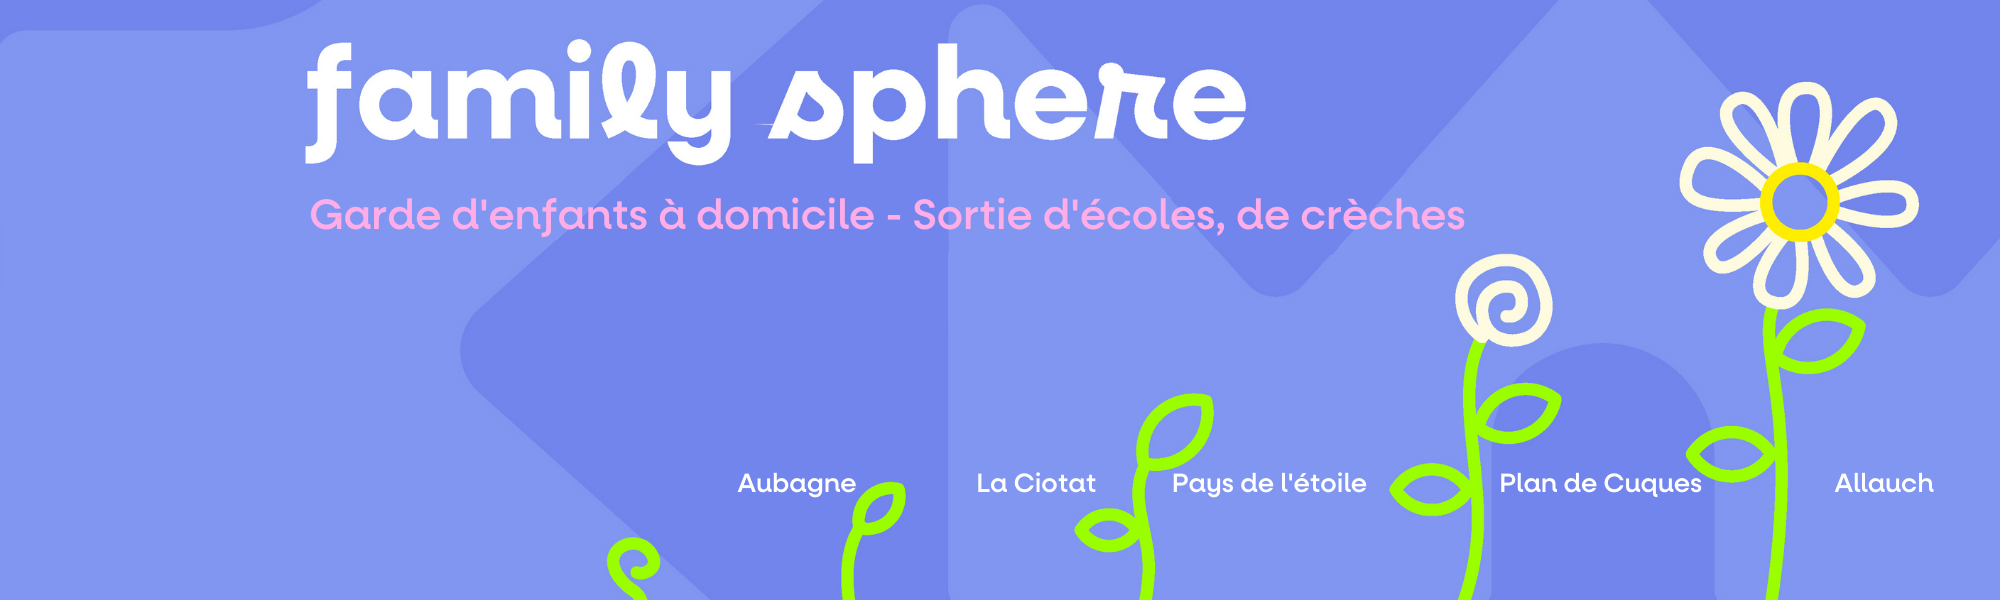 Family Sphere Aubagne - La Ciotat